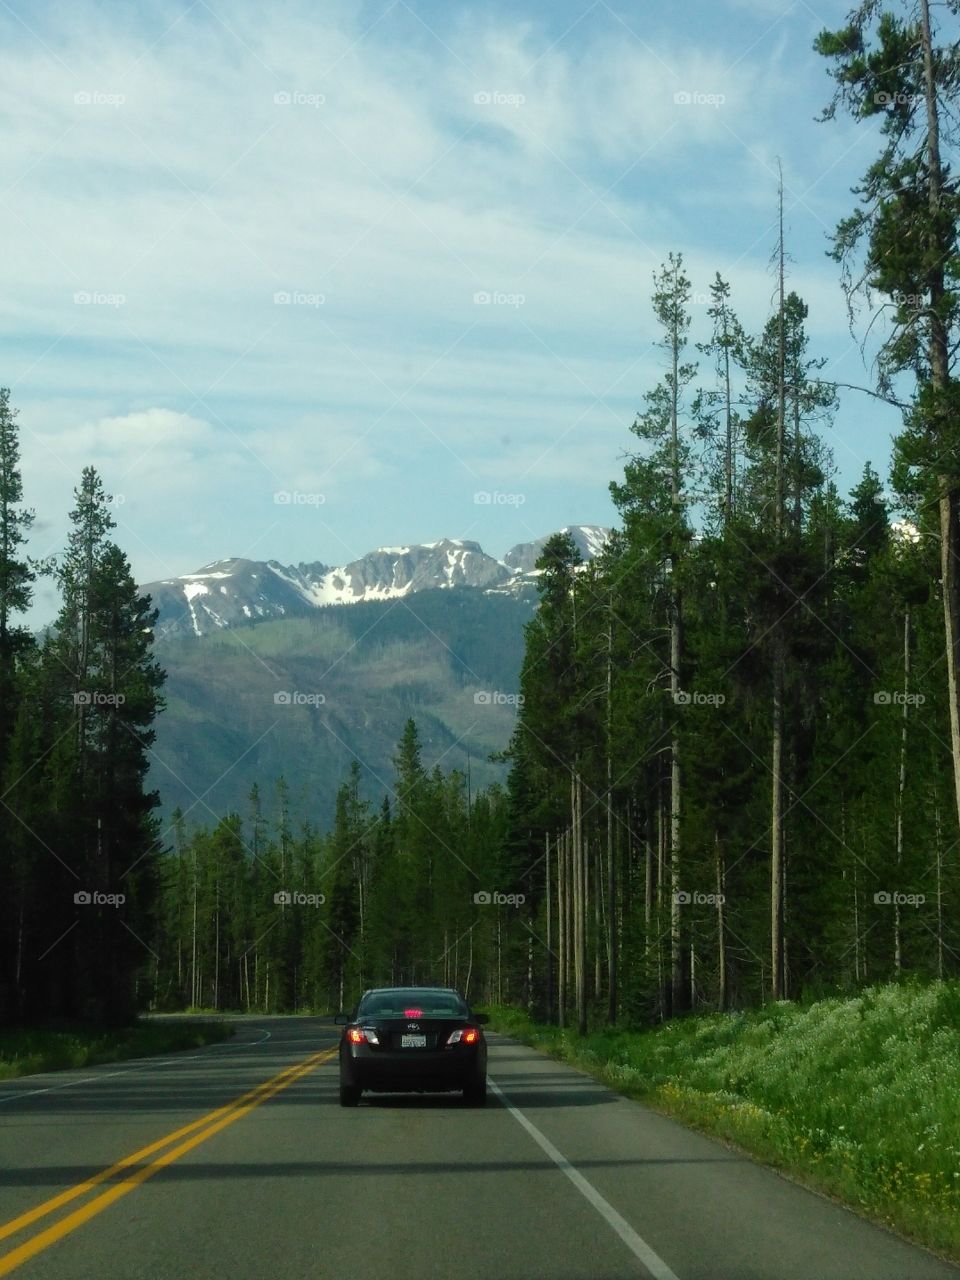 Yellowstone roads